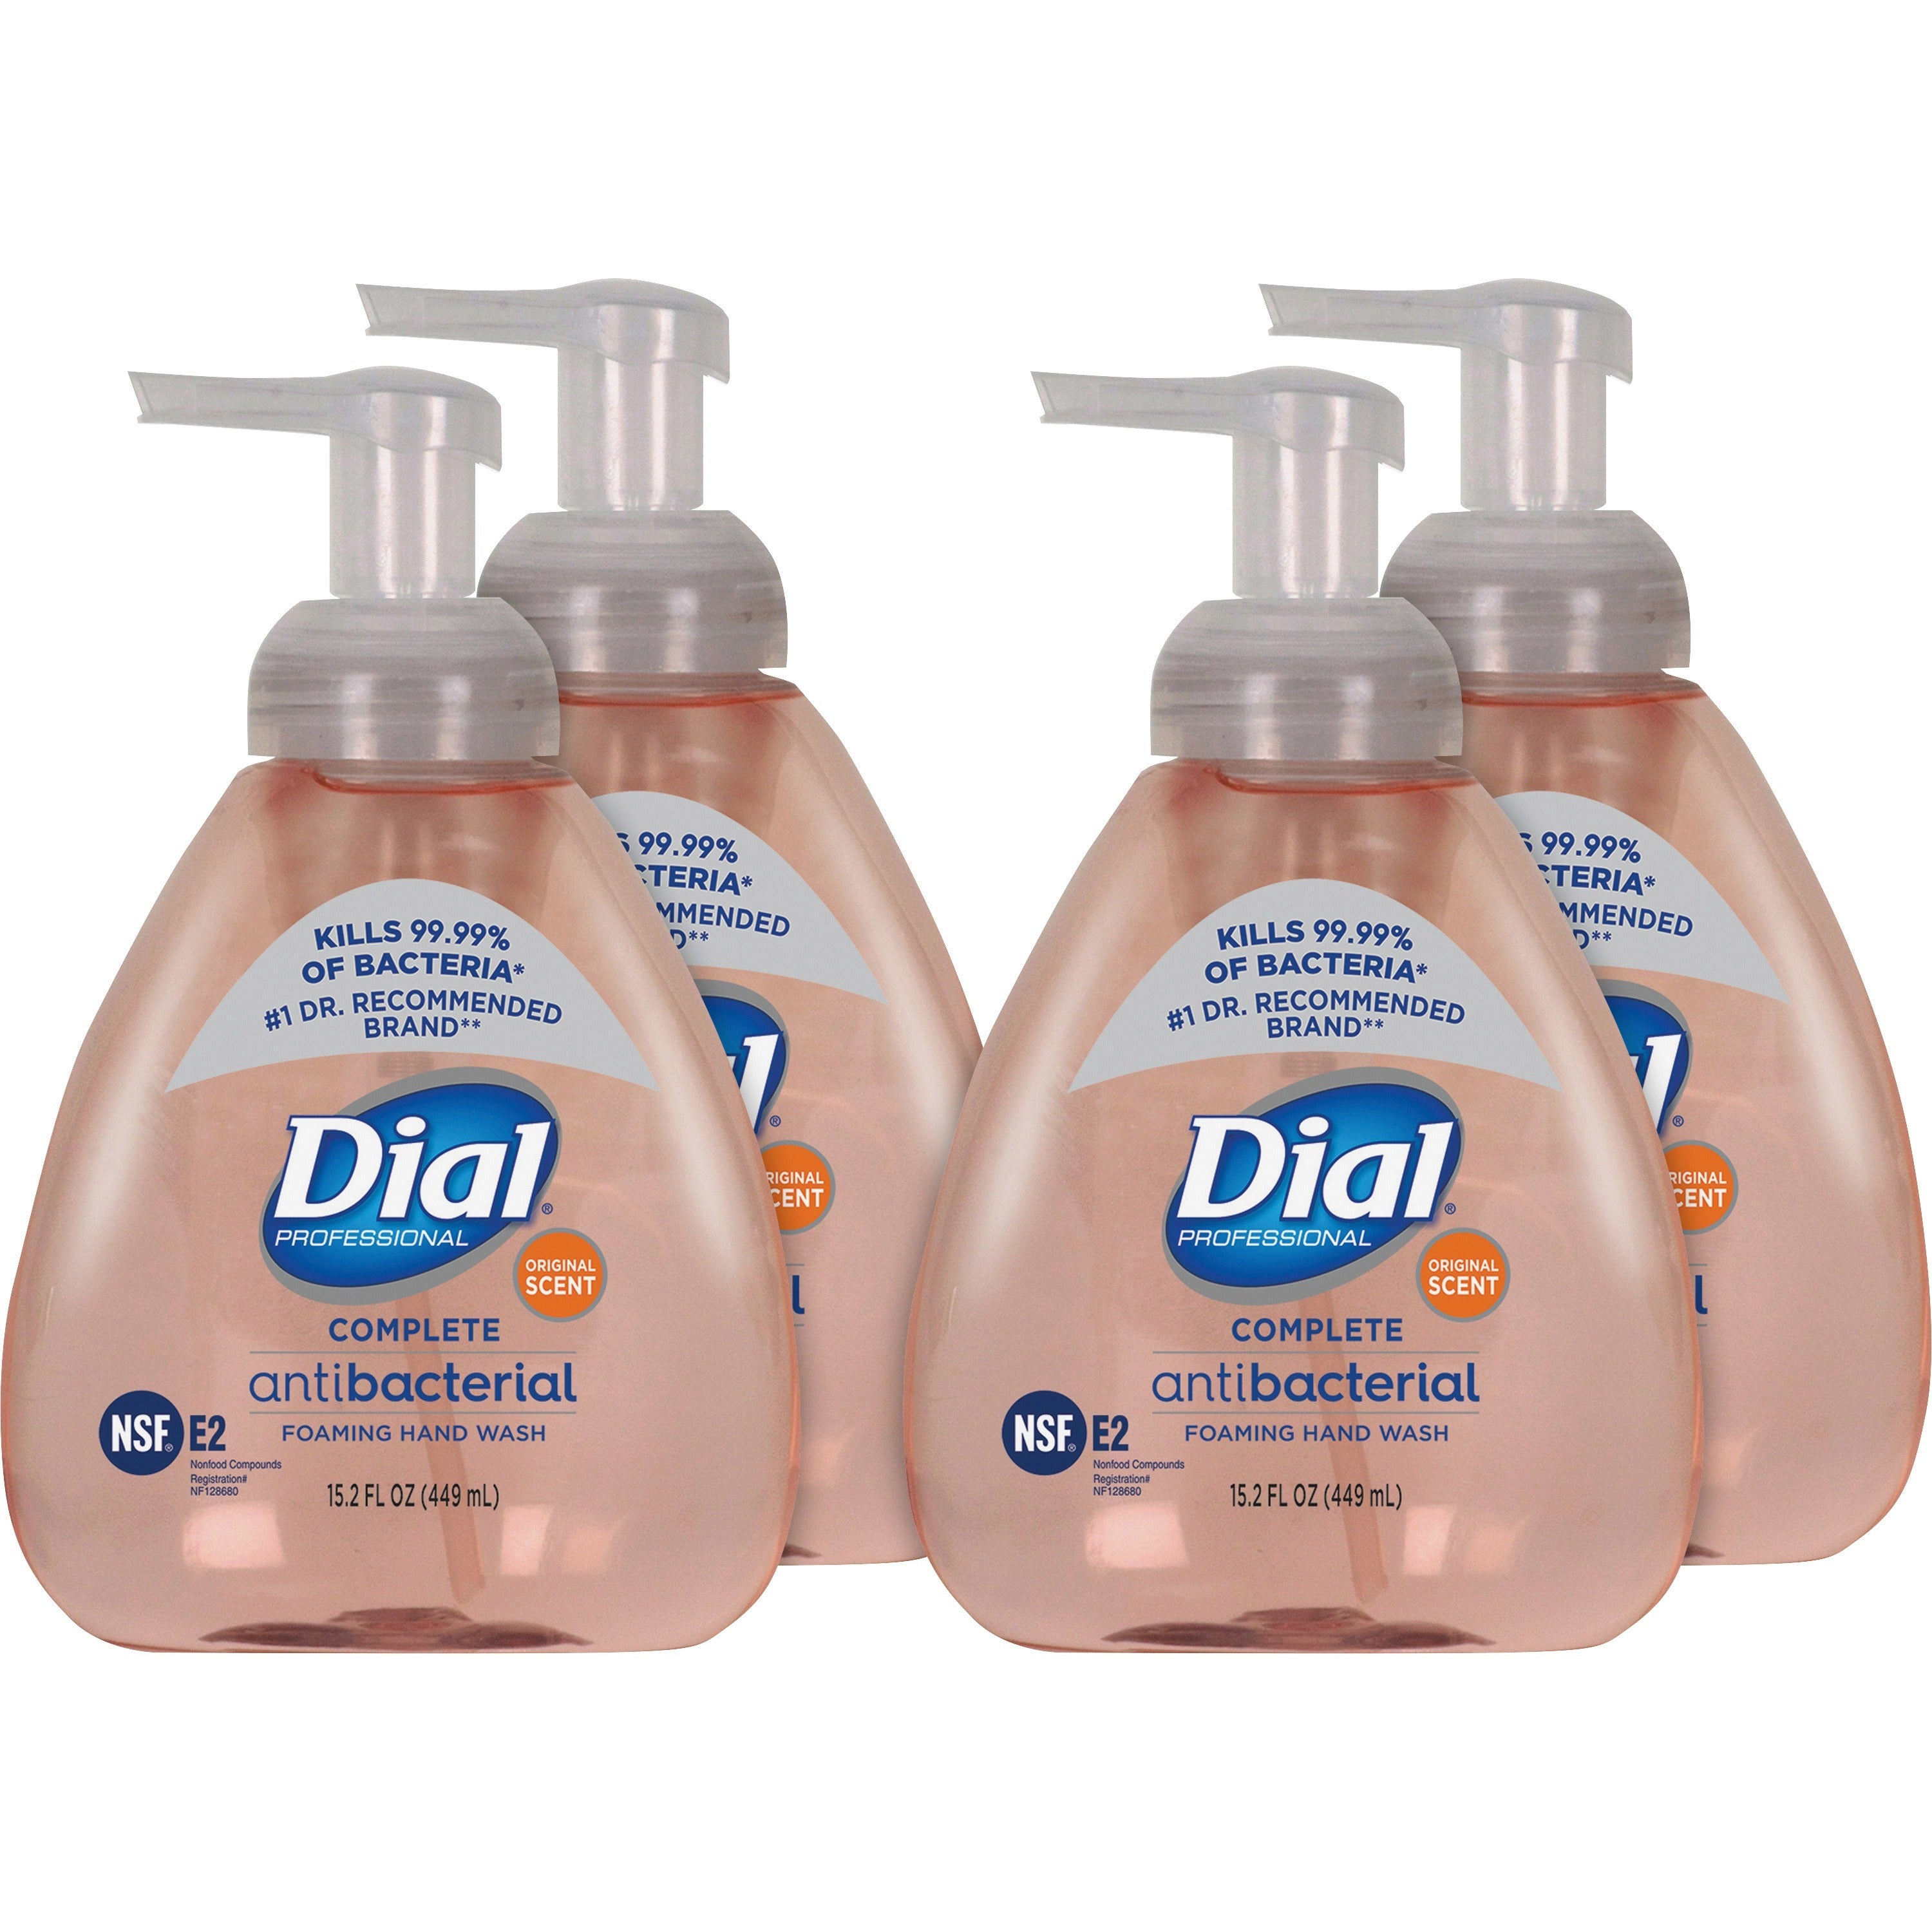 Dial Complete Antibacterial Foaming Hand Wash - Original ScentFor - 15.2 fl oz (449.5 mL) - Pump Bottle Dispenser - Kill Germs - Hand - Antibacterial - Pink - 4 / Carton - 